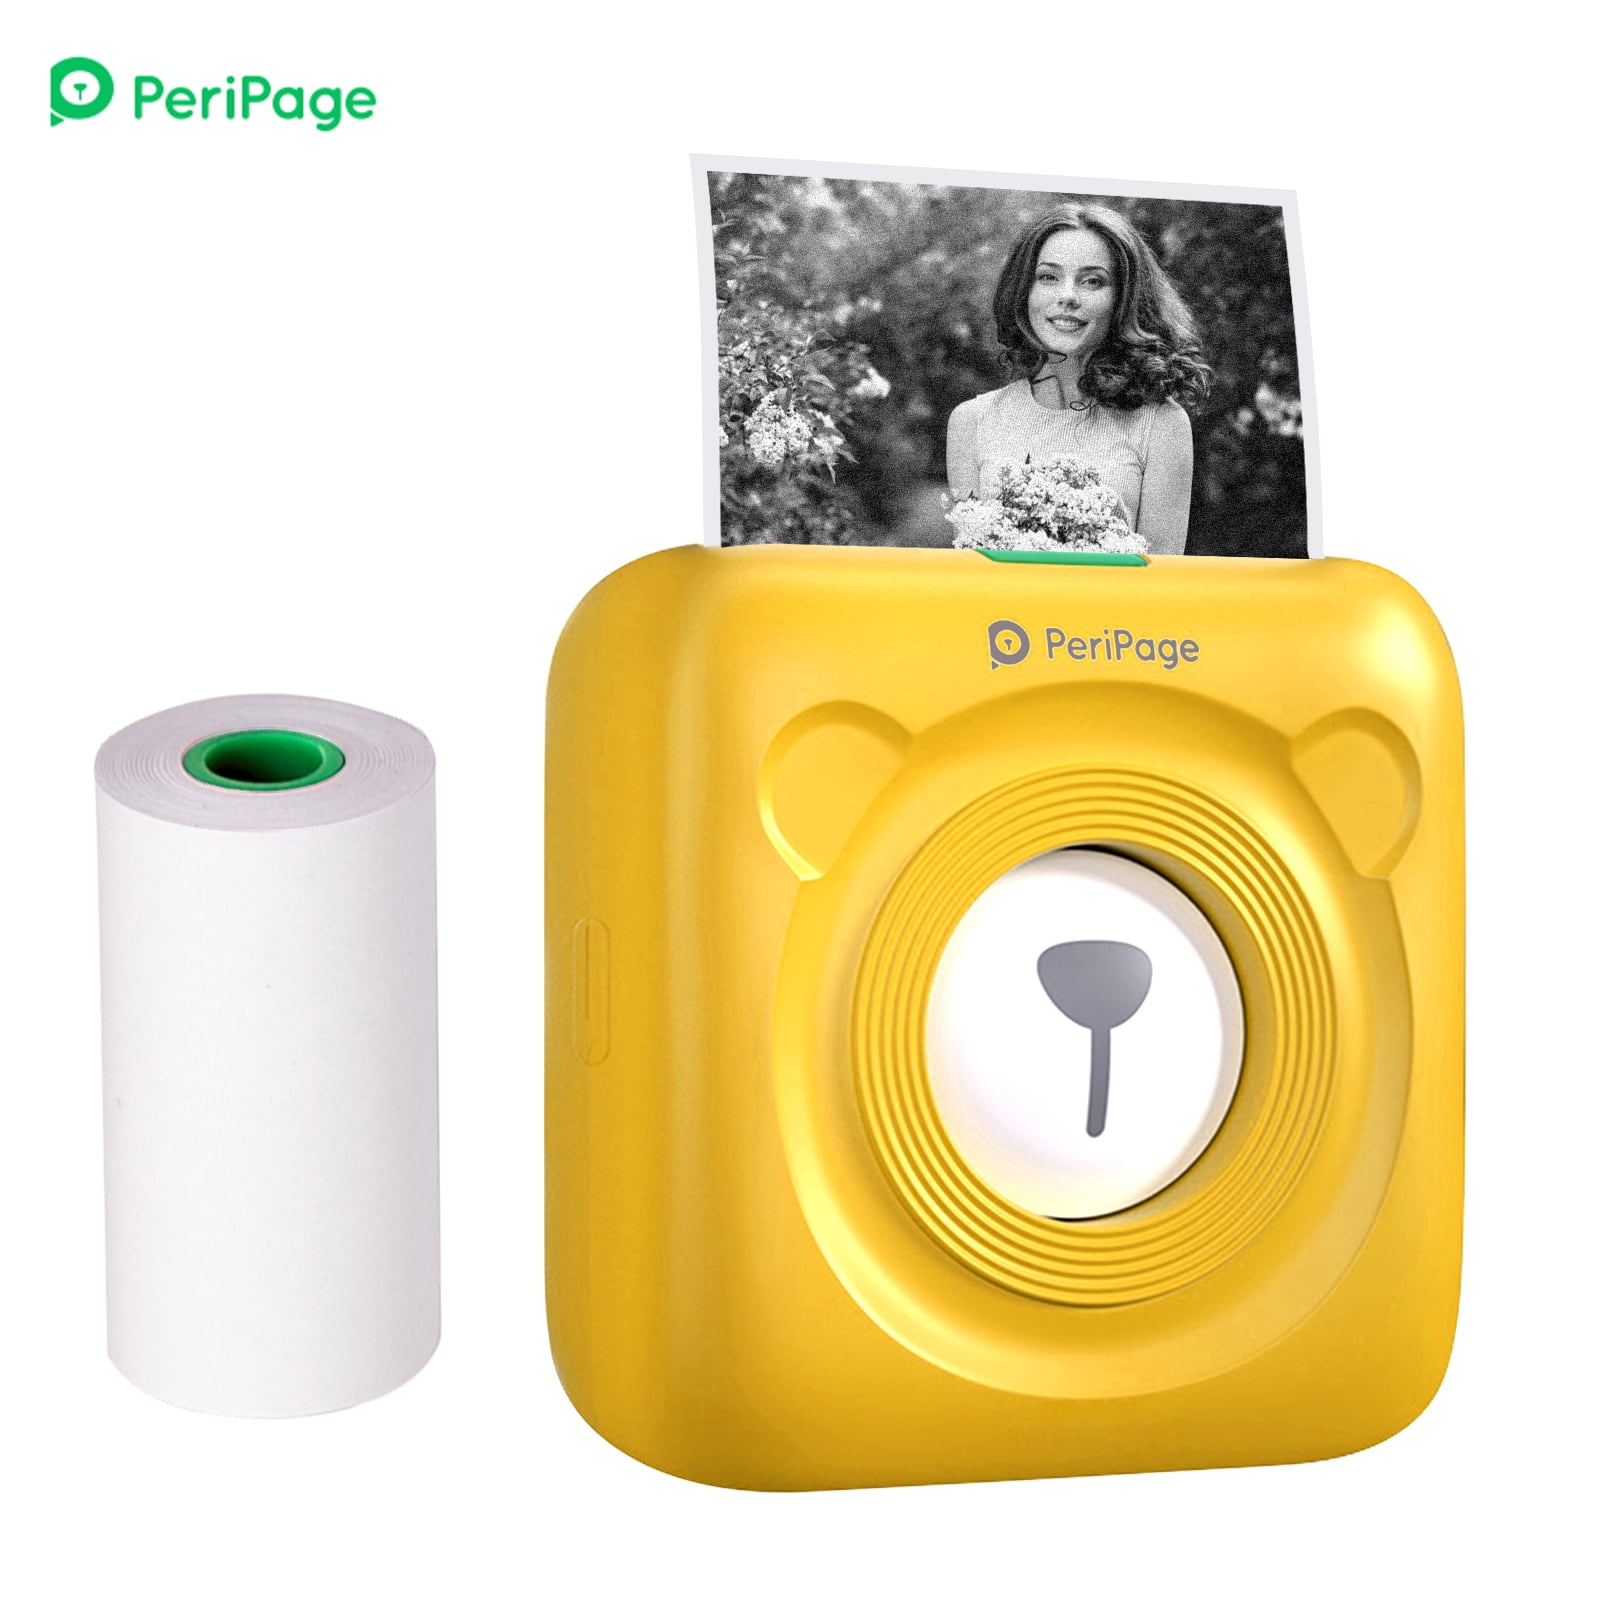 PeriPage Mini Pocket Wireless Bluetooth Thermal Printer Picture